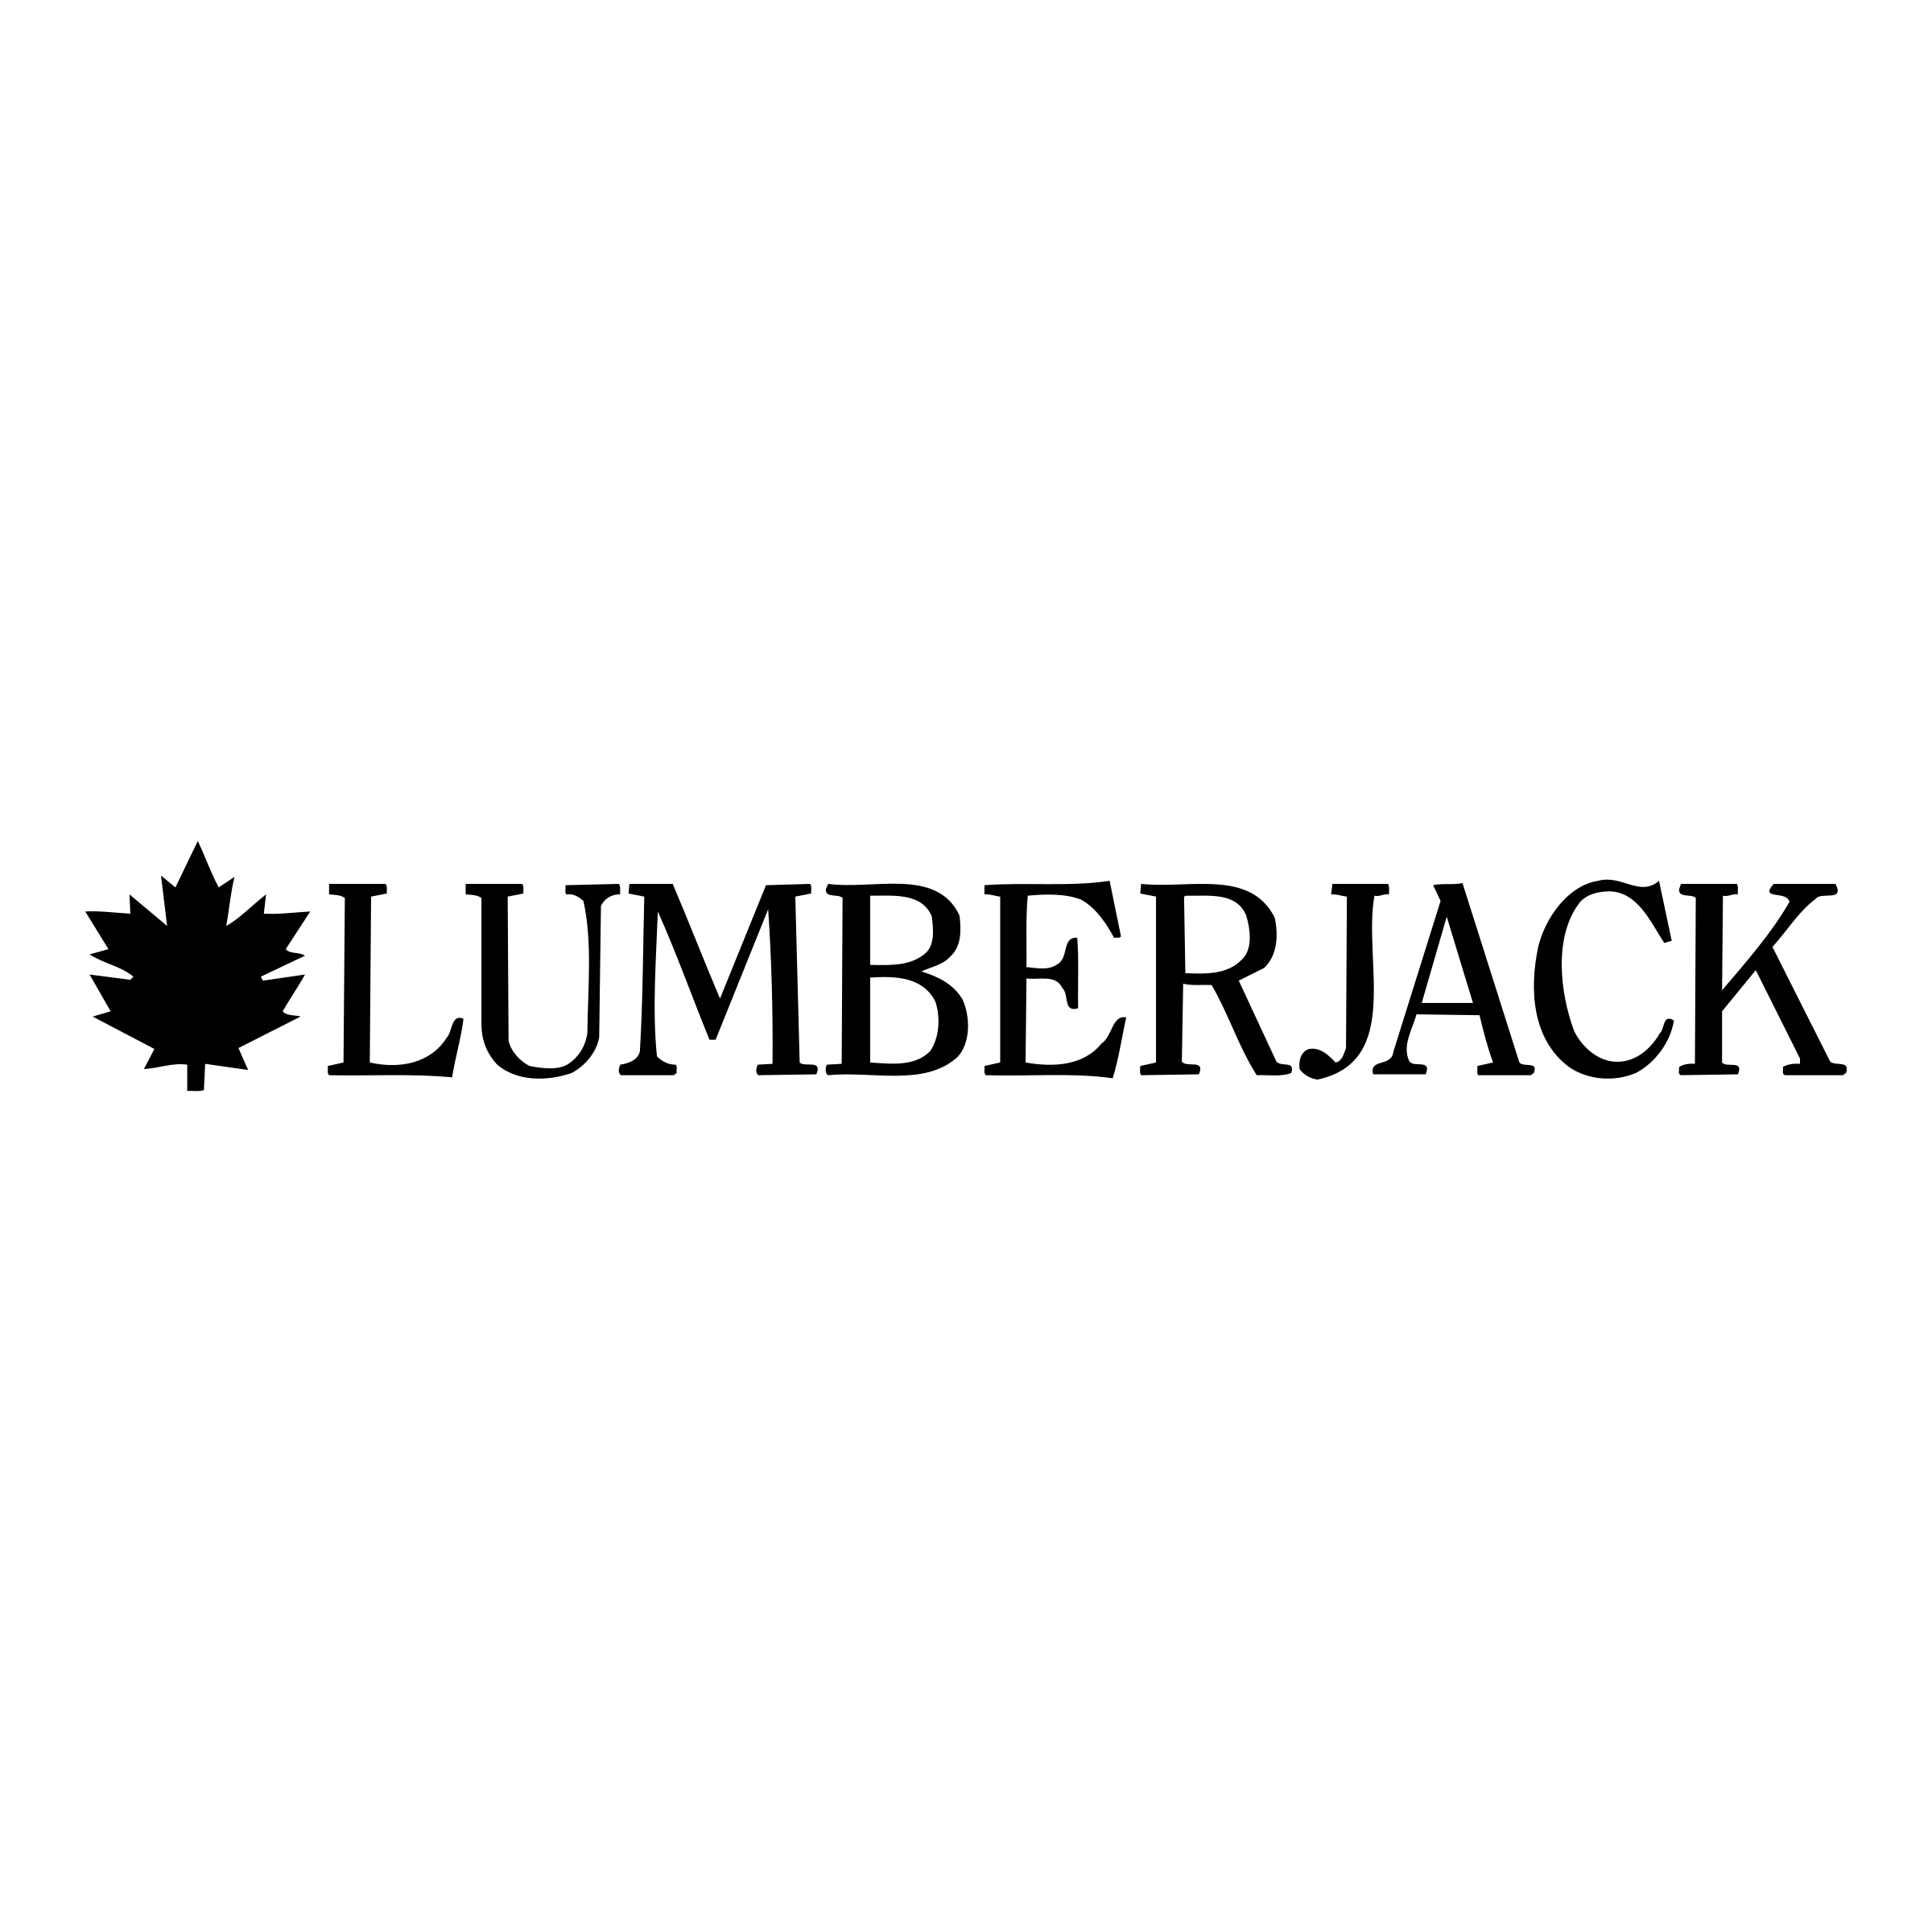 Lumberjack Logo - Lumberjack Logo PNG Transparent & SVG Vector